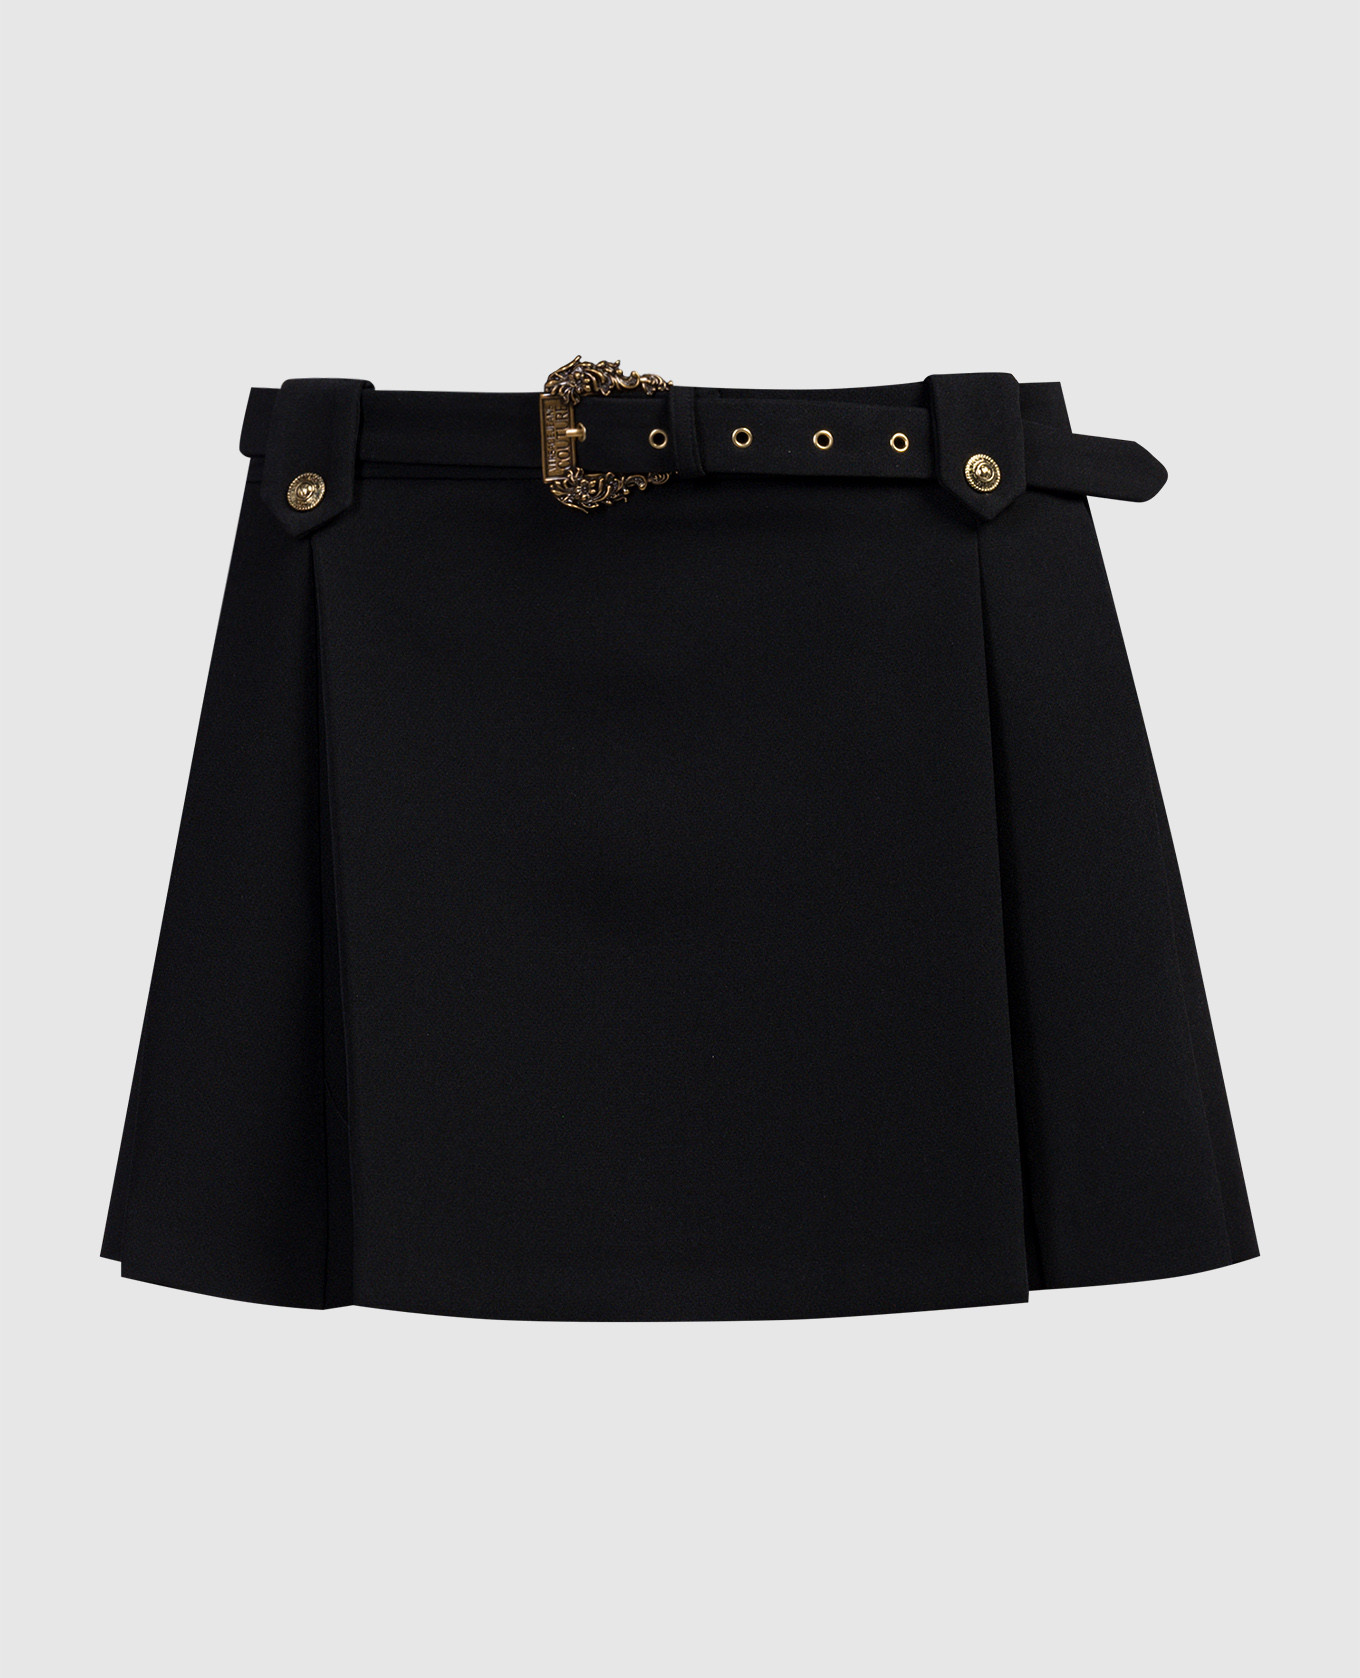 Black mini skirt with snaps